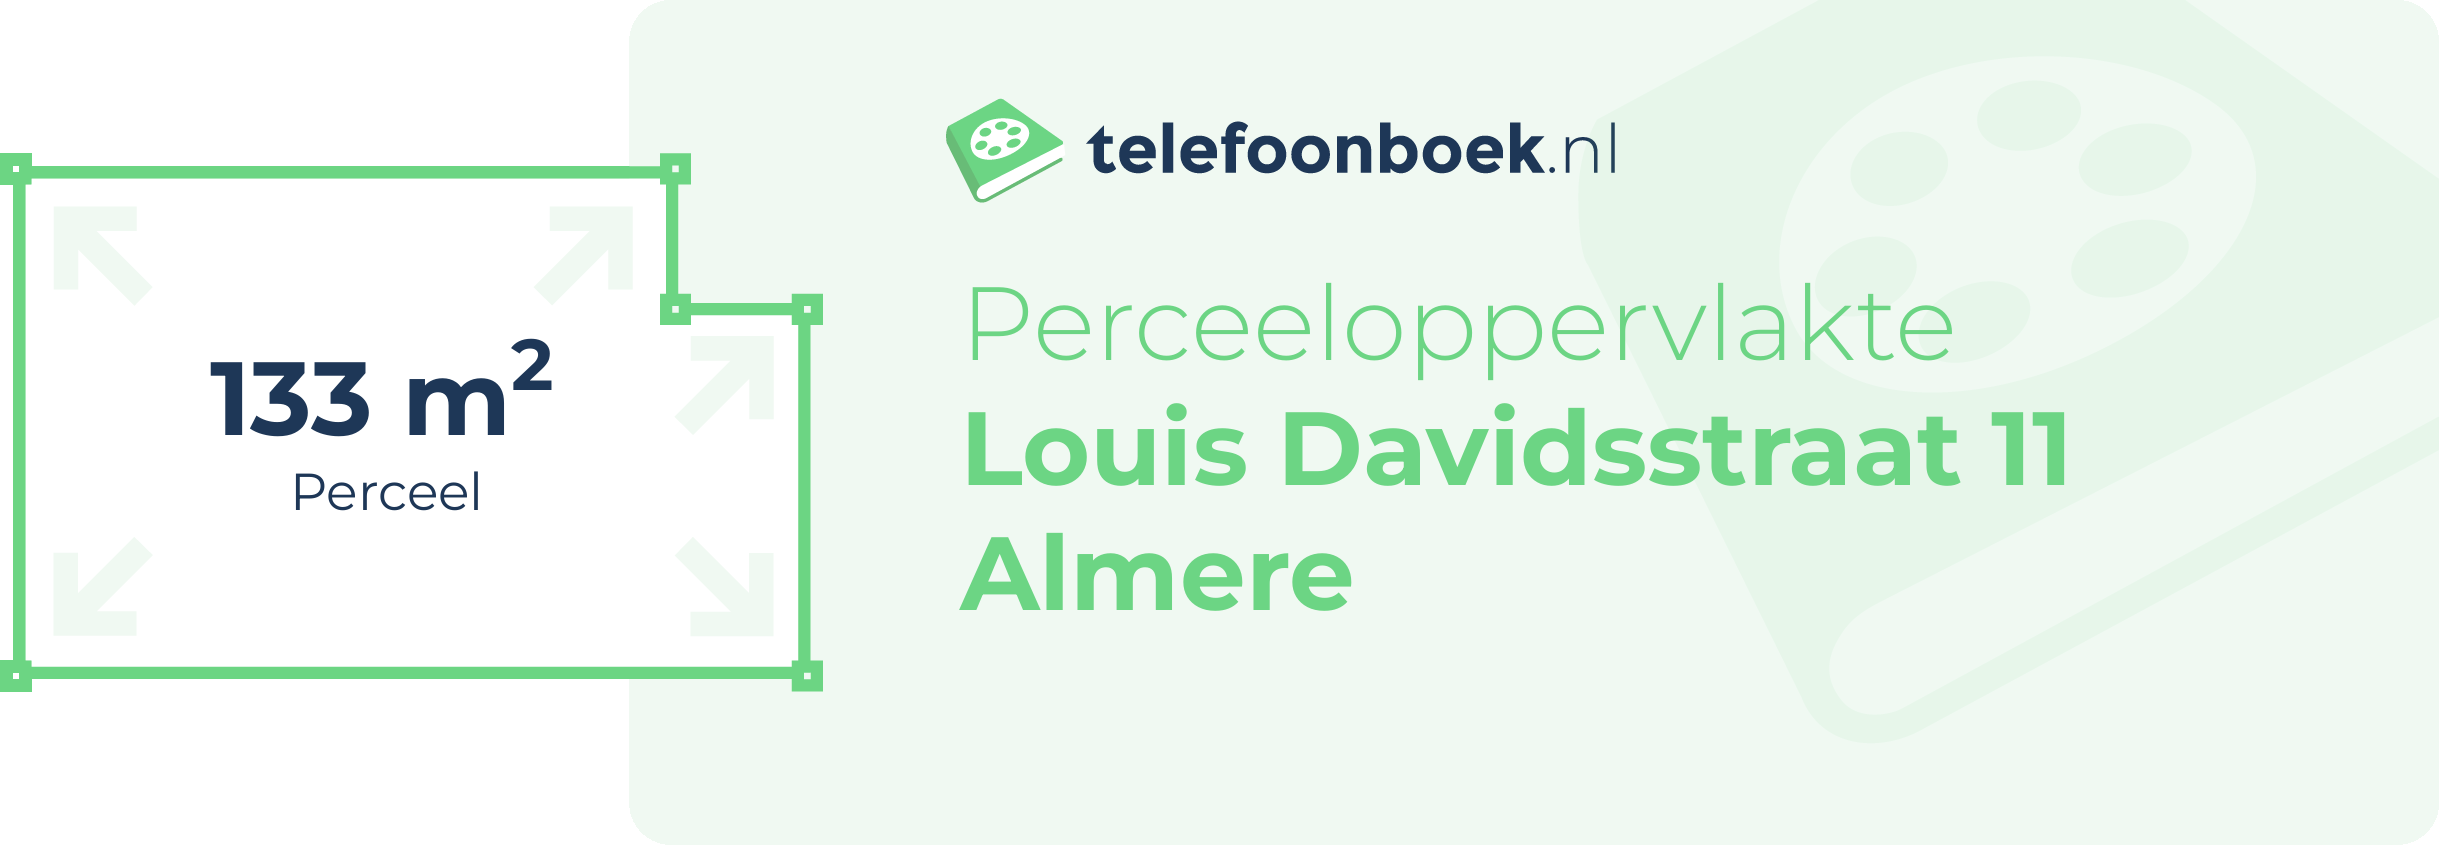 Perceeloppervlakte Louis Davidsstraat 11 Almere